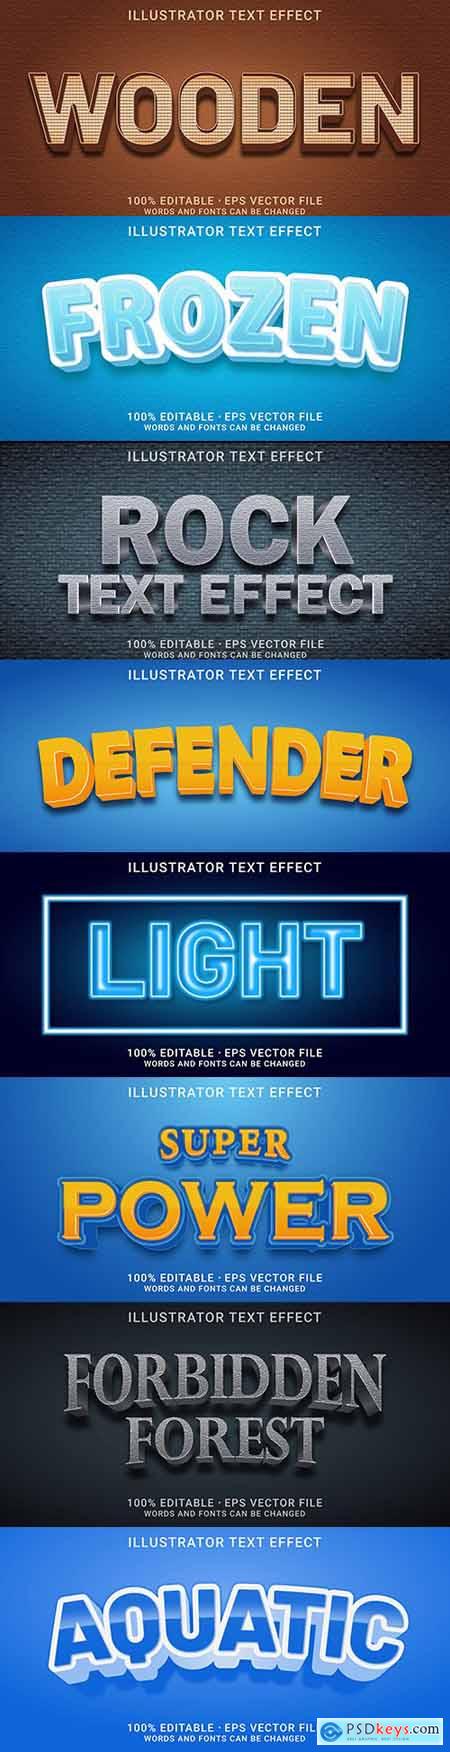 Editable font effect text collection illustration design 150